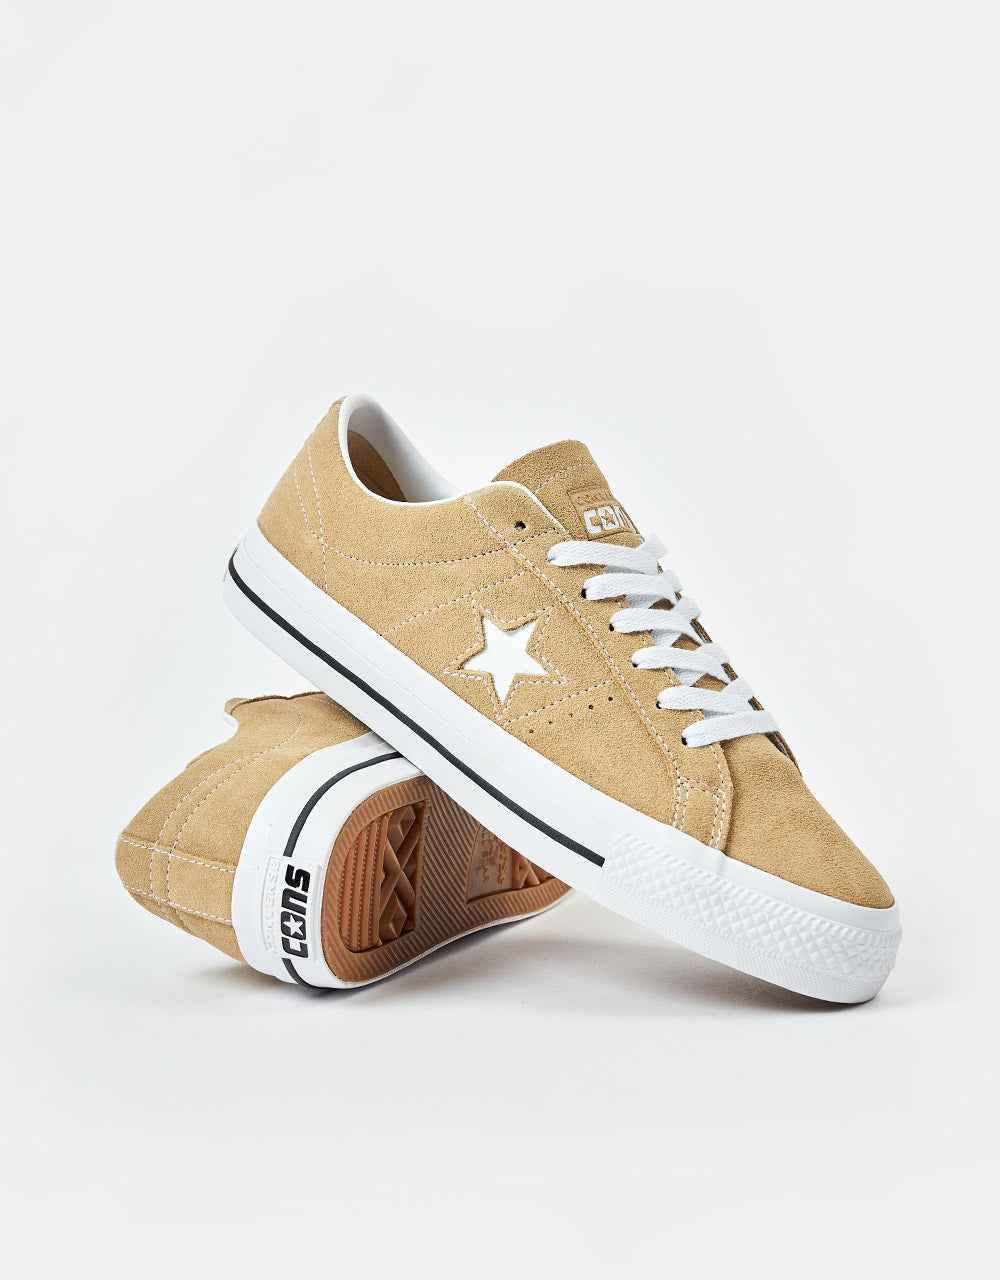 Converse One Star Pro Ox Suede Skate Shoes - Nomad Khaki/Black/Egret